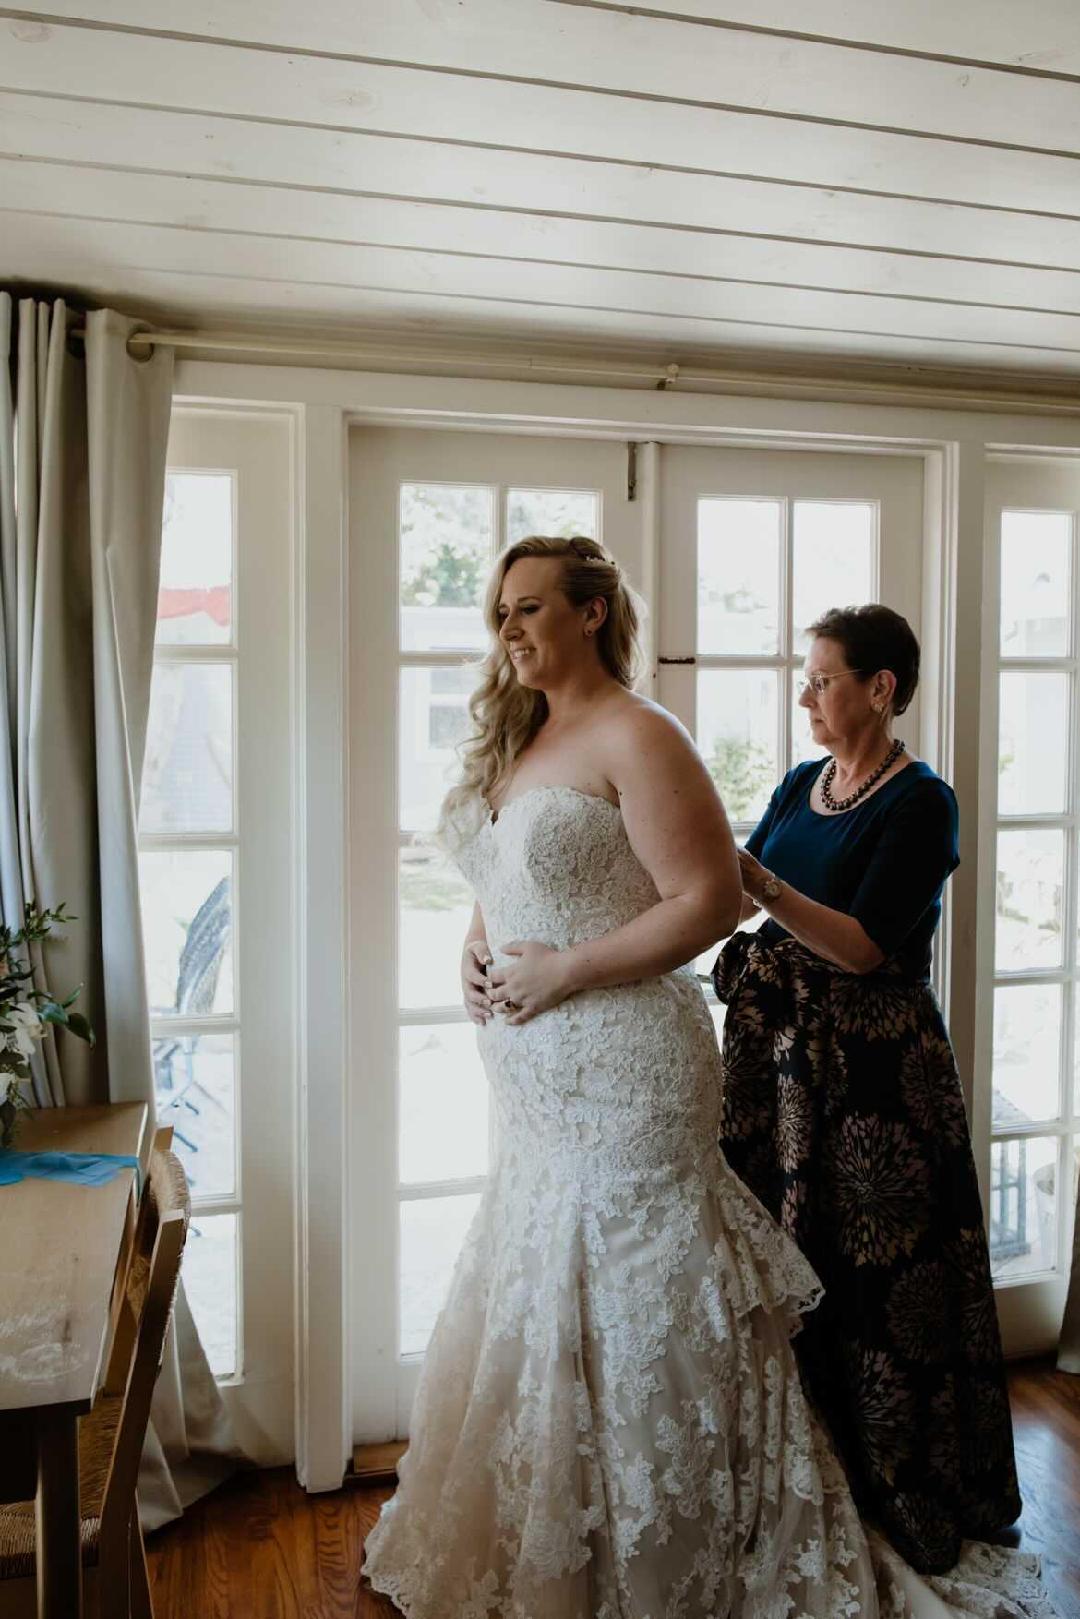 Amy's Strapless Lace Mermaid Wedding Dress - Strut Bridal Salon